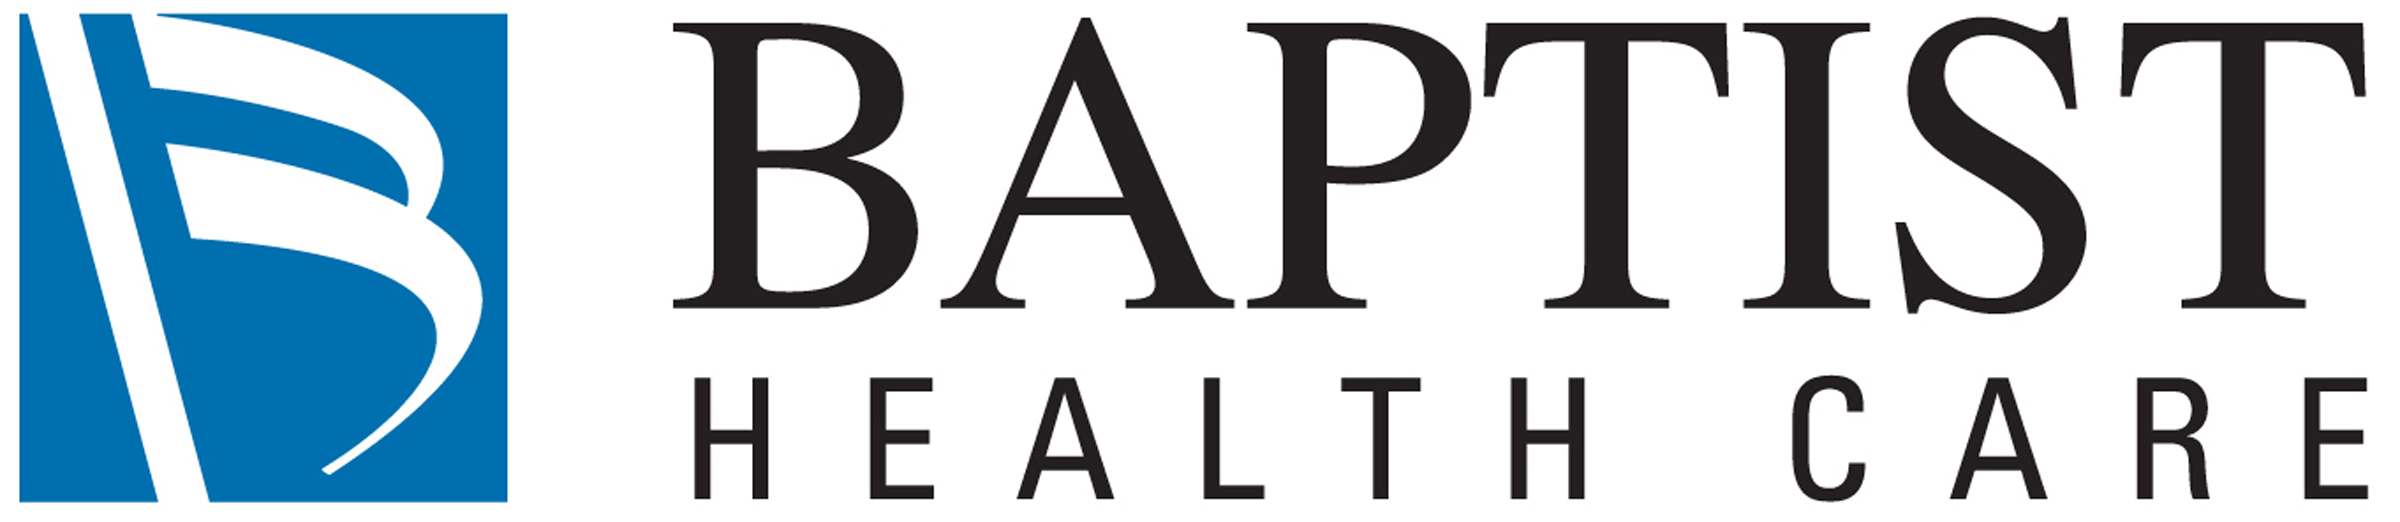 Baptist Healthcare Logo